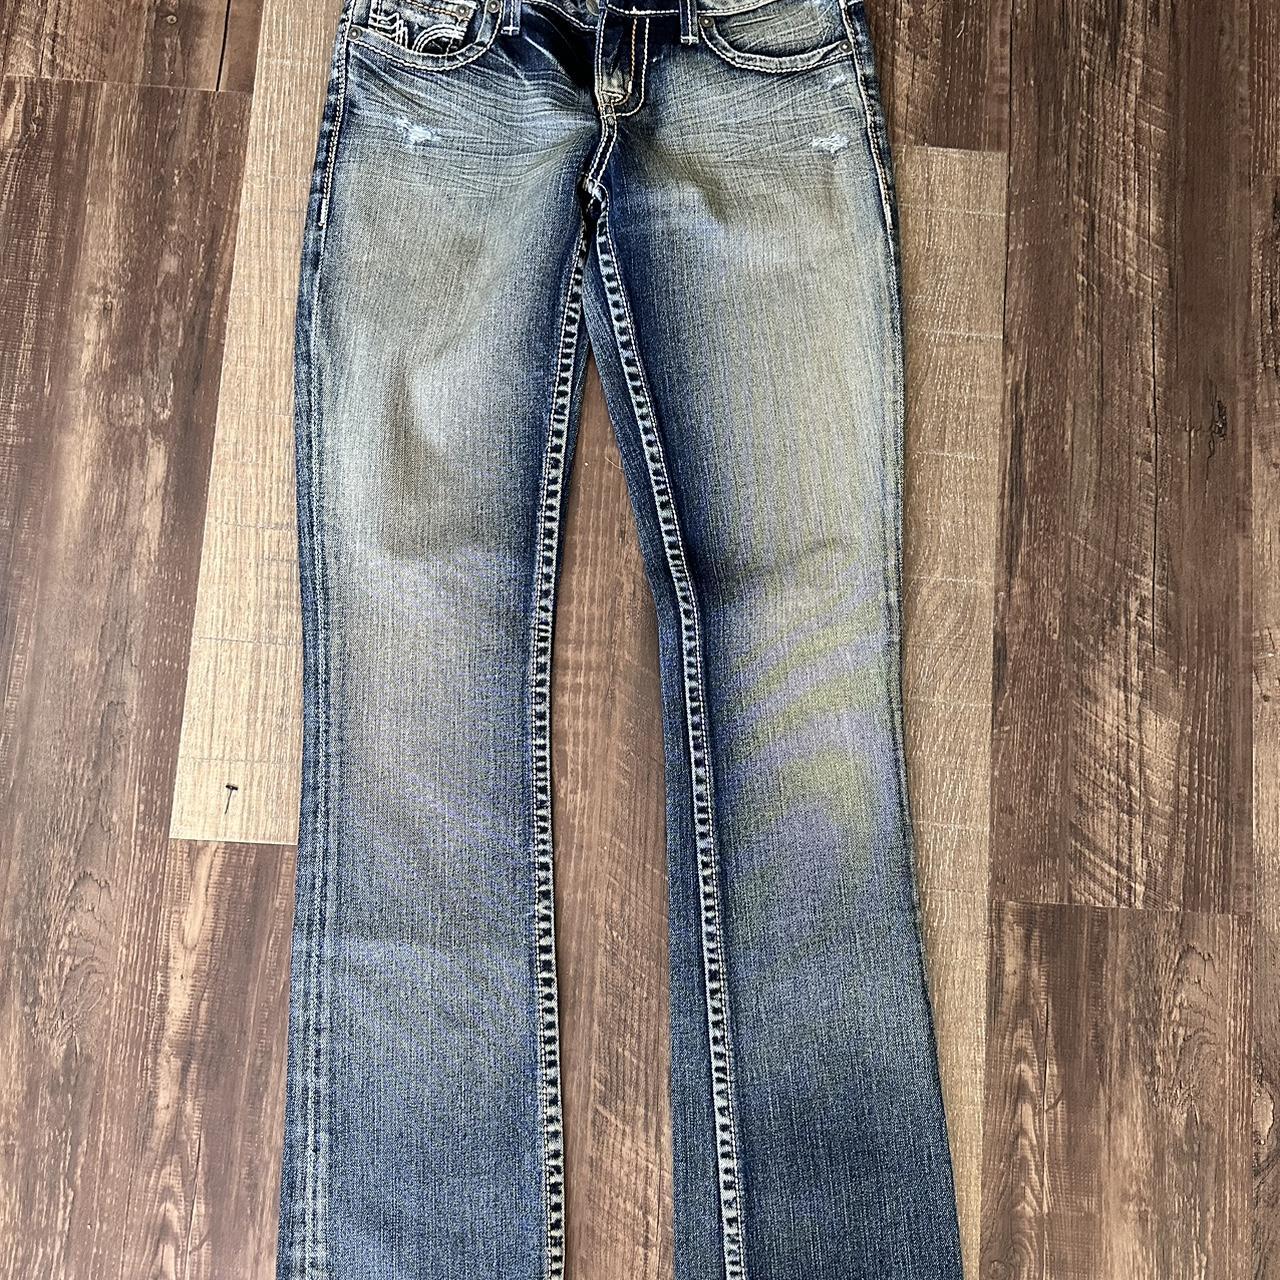 PrvCy brand distressed low jeans. Great... Depop